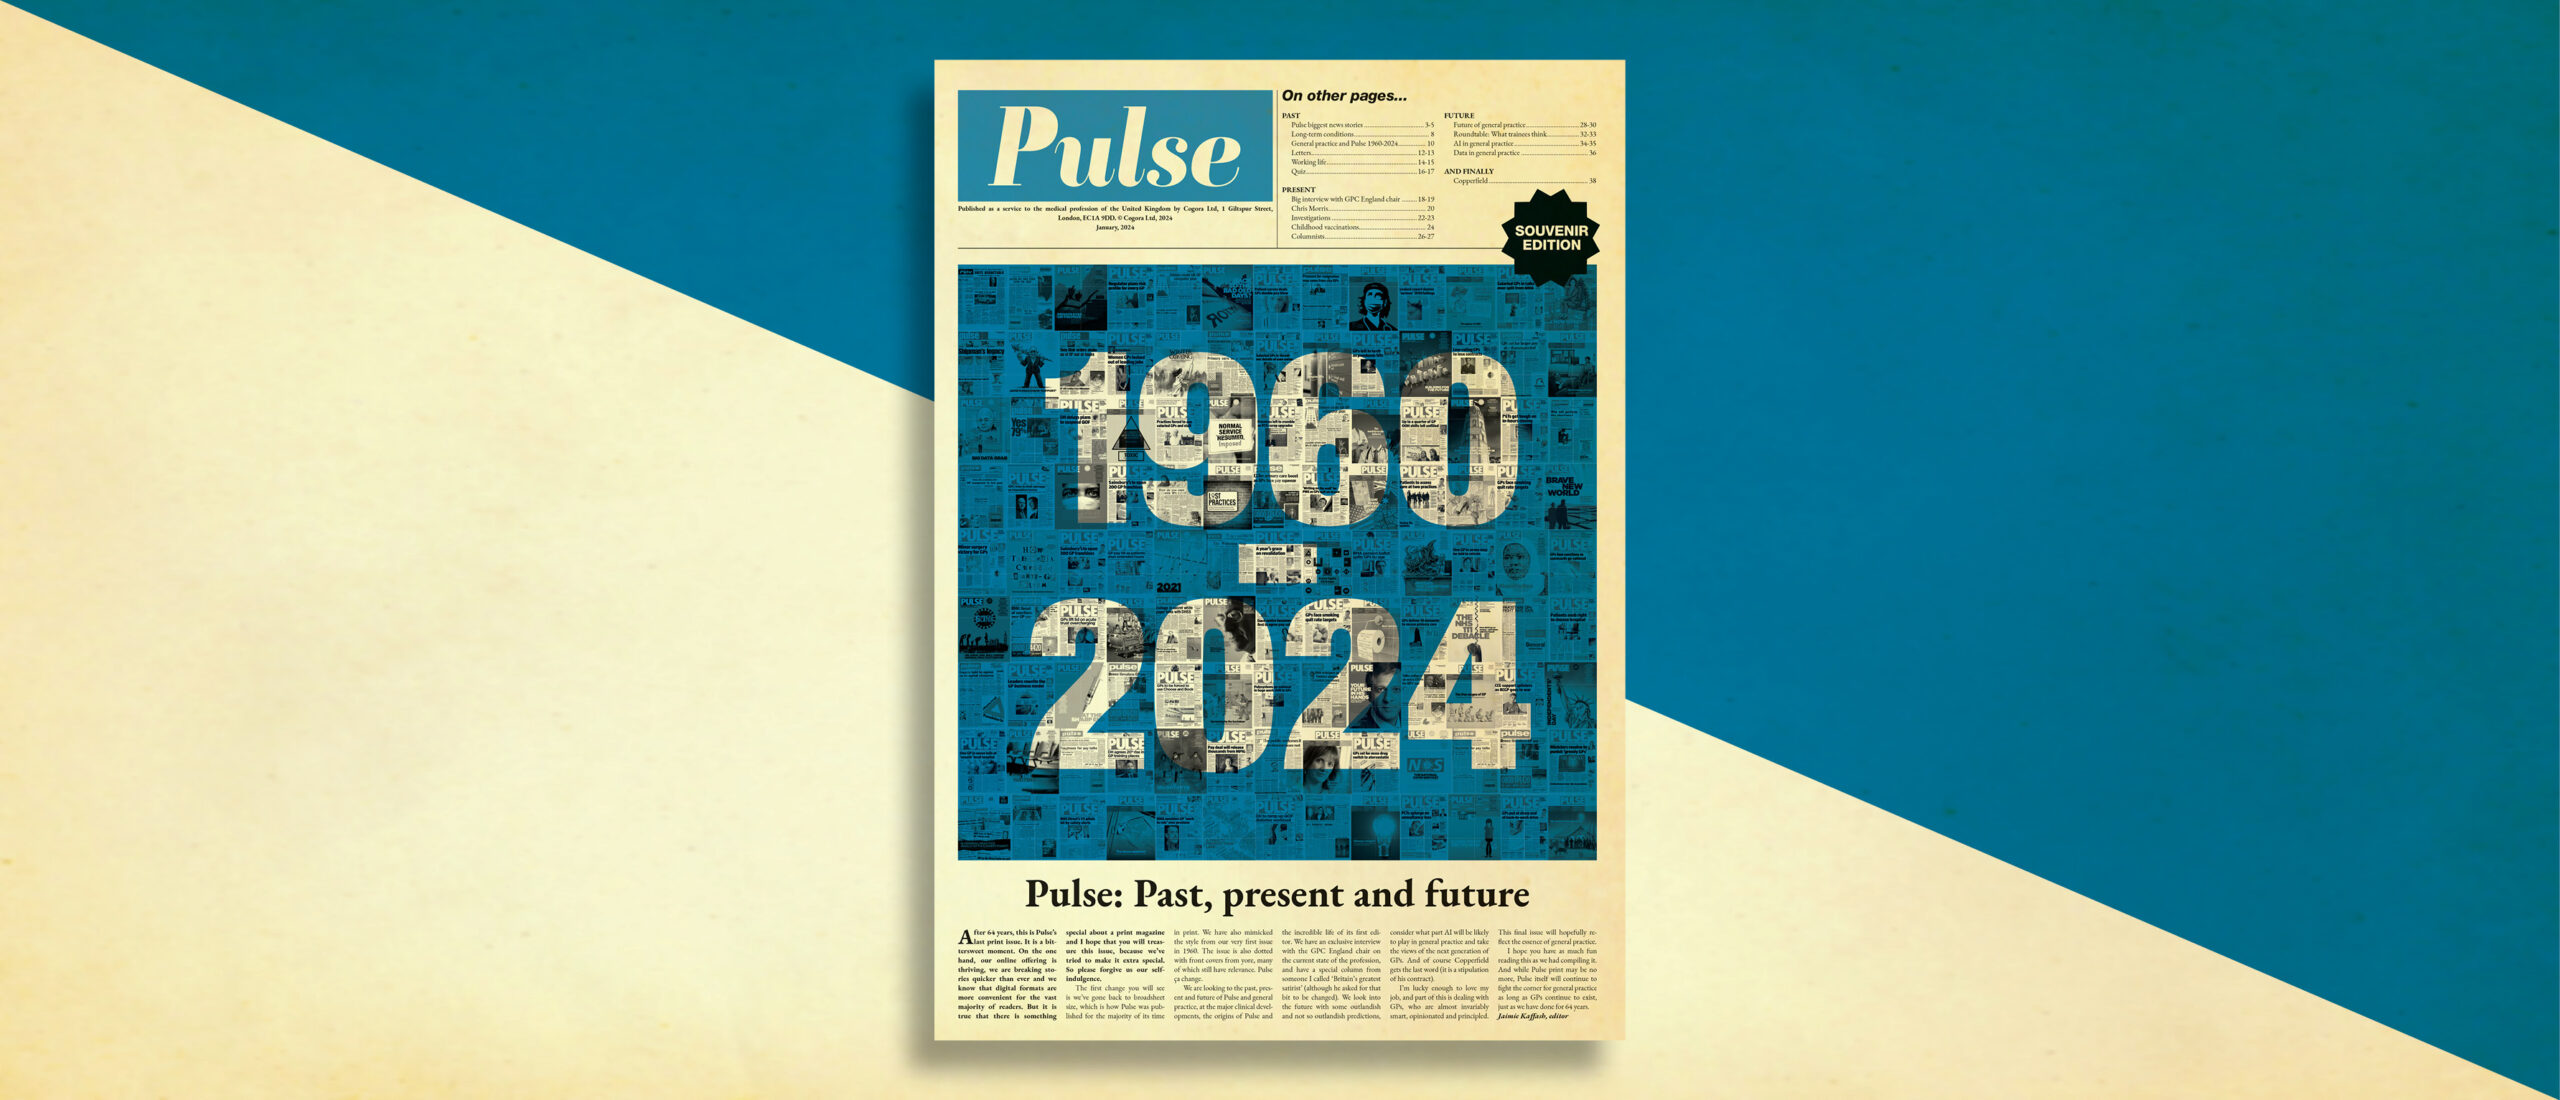 Pulse: Past, present and future